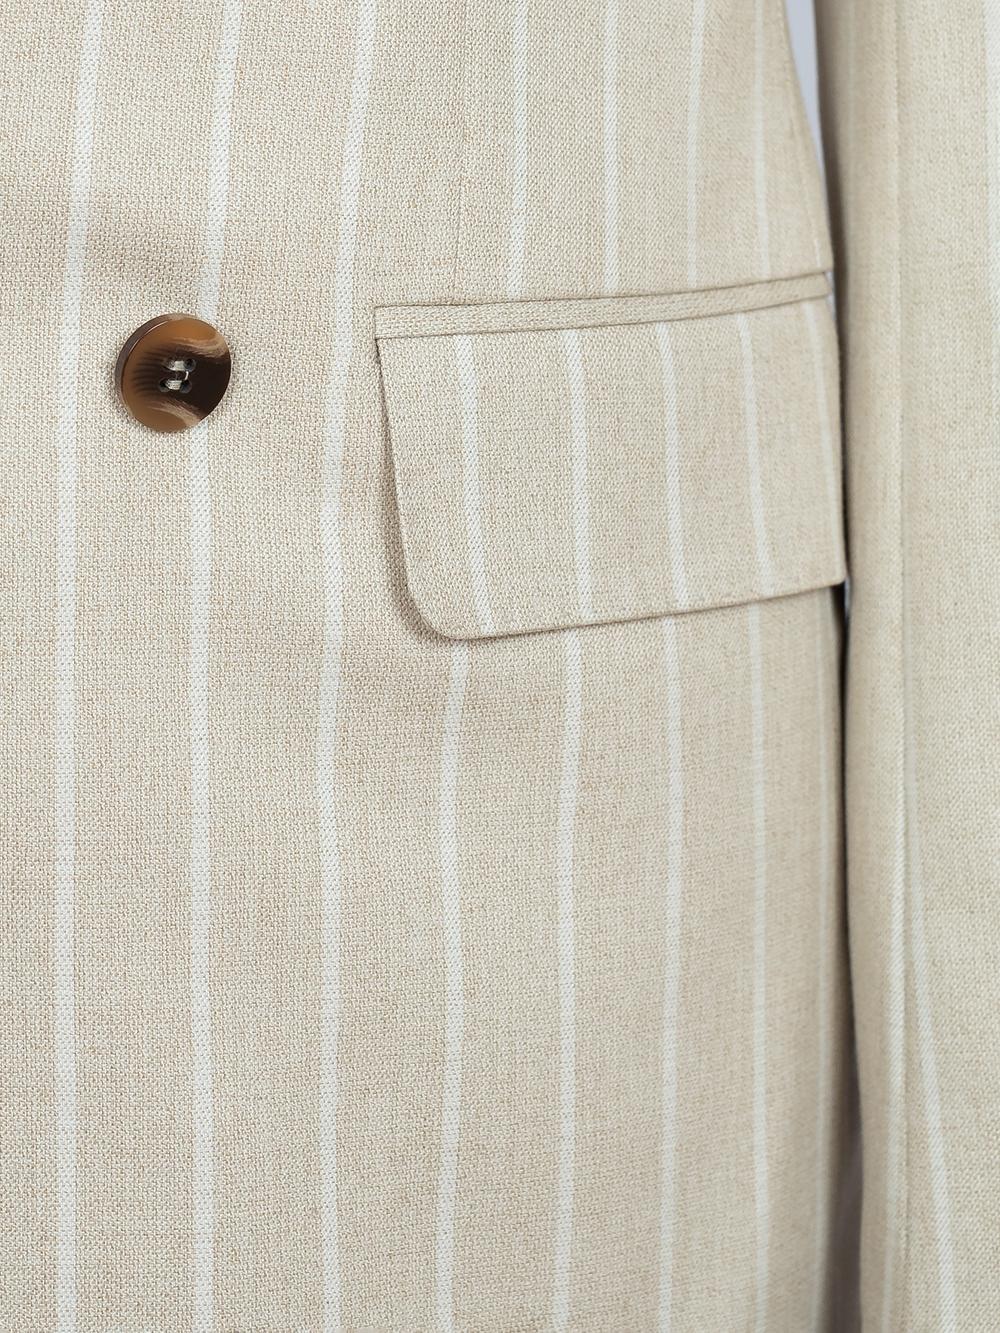 Antonio White Set Blazer Linen Suit